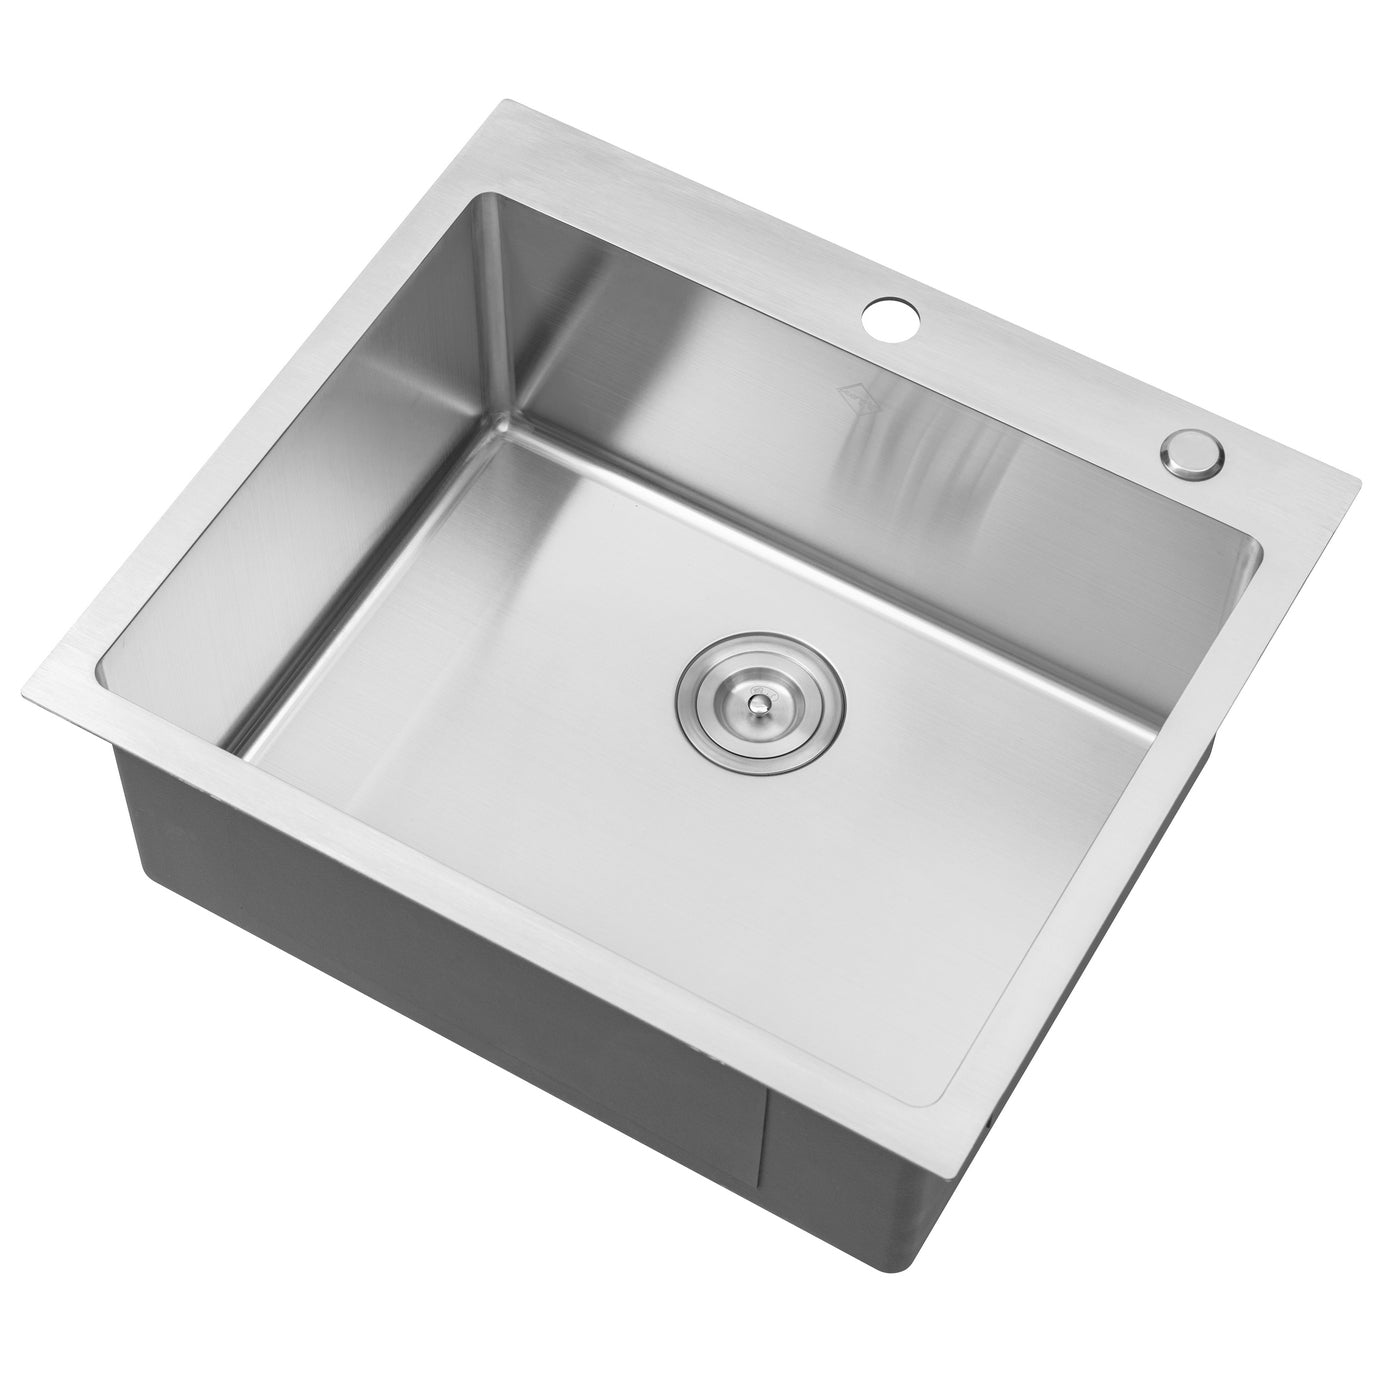 25 in. Drop-In / Topmount 16 Gauge Stainless Steel Single Bowl Kitchen Island / Bar Prep Sink with 15mm Radius Corner Design